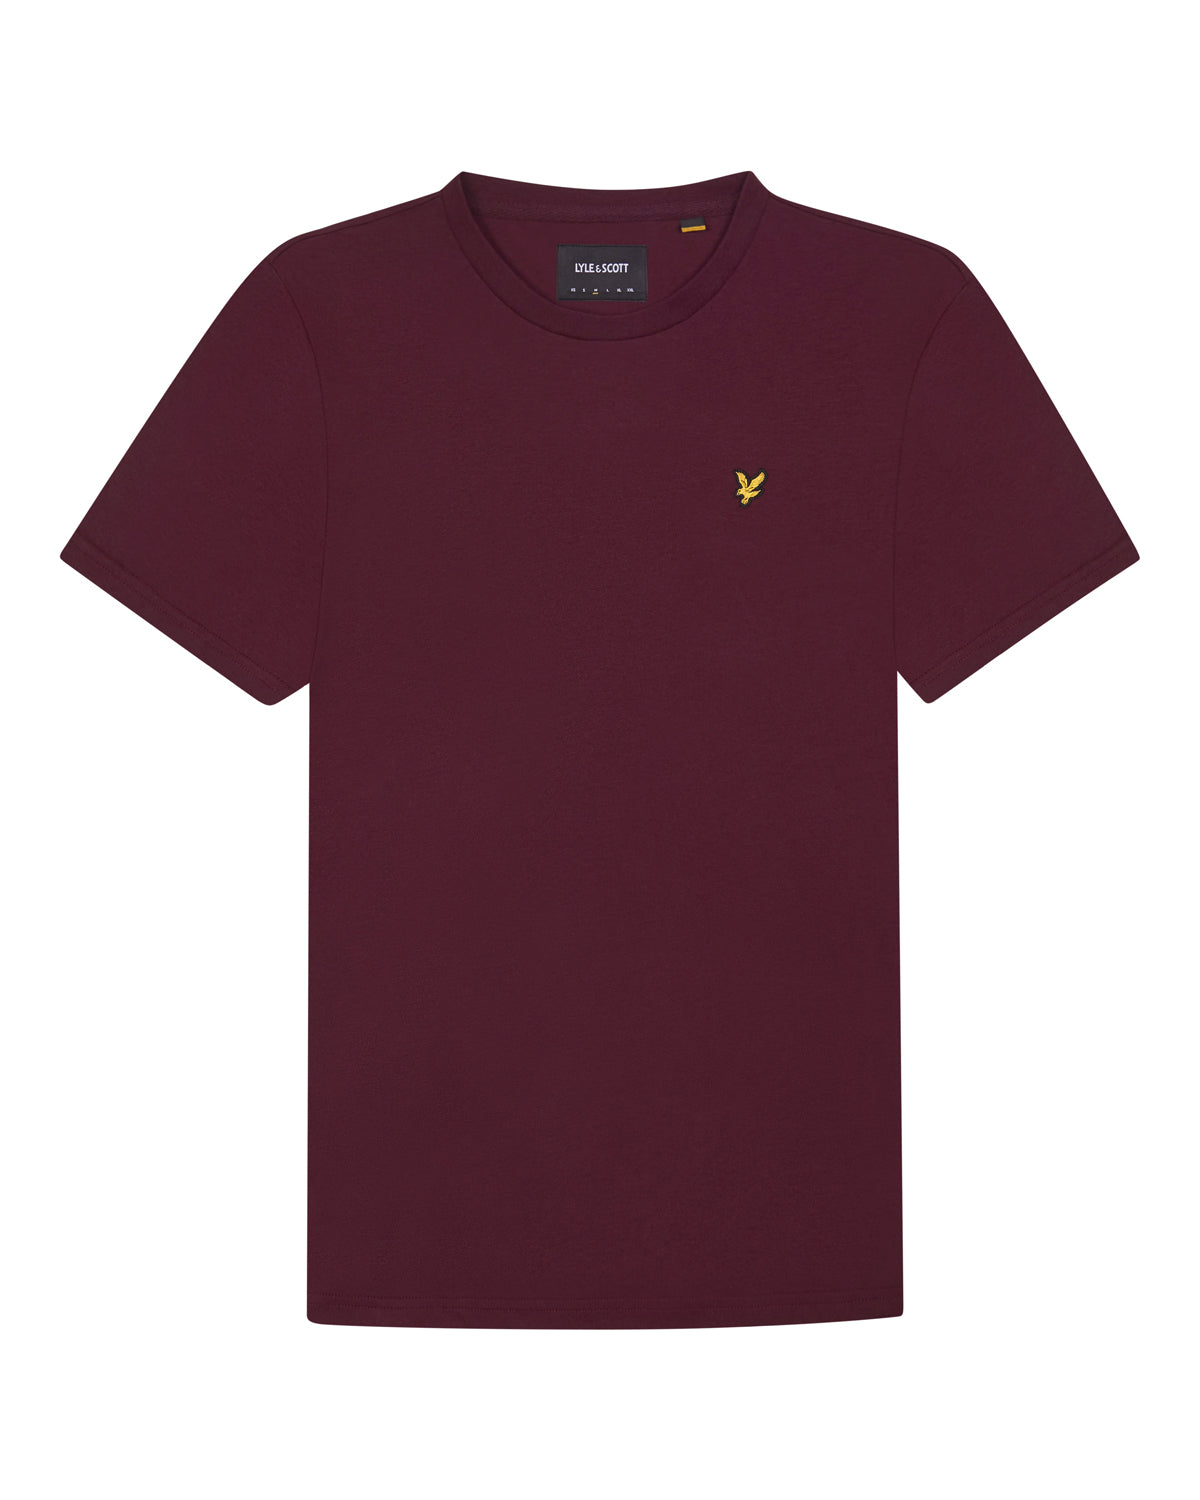 Lyle & Scott Plain Burgundy T-Shirt